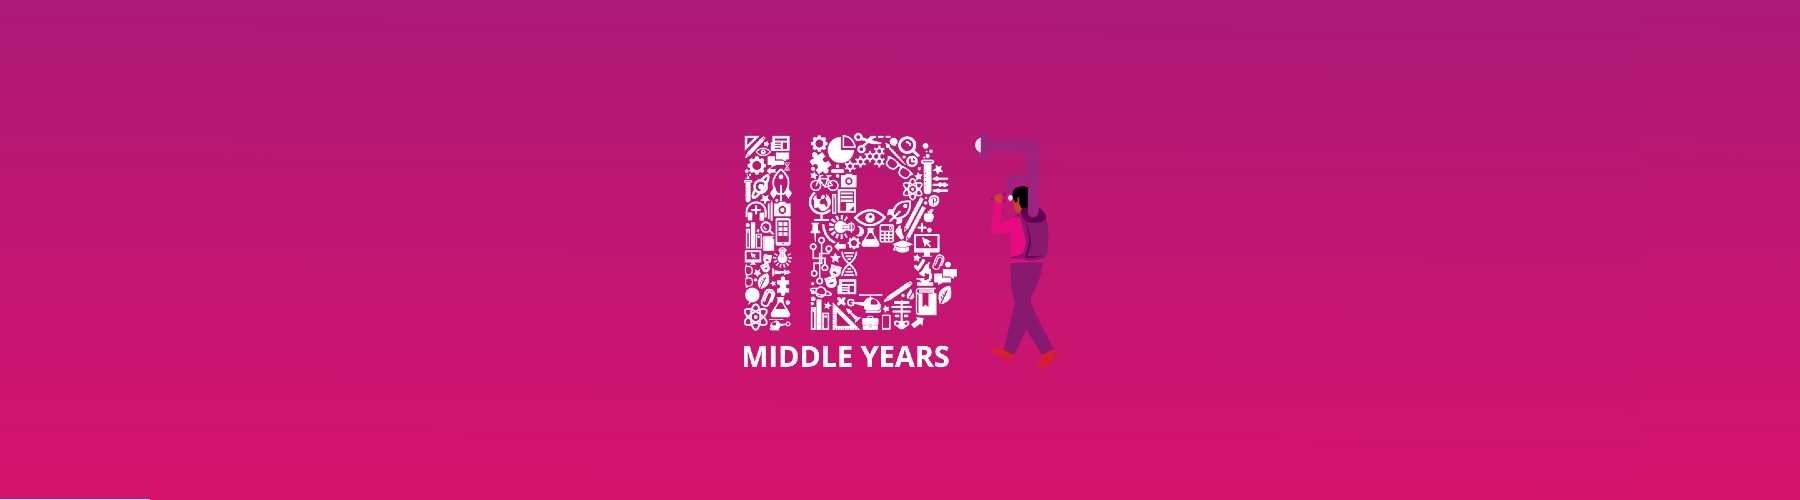 IB Middle Years hero banner 